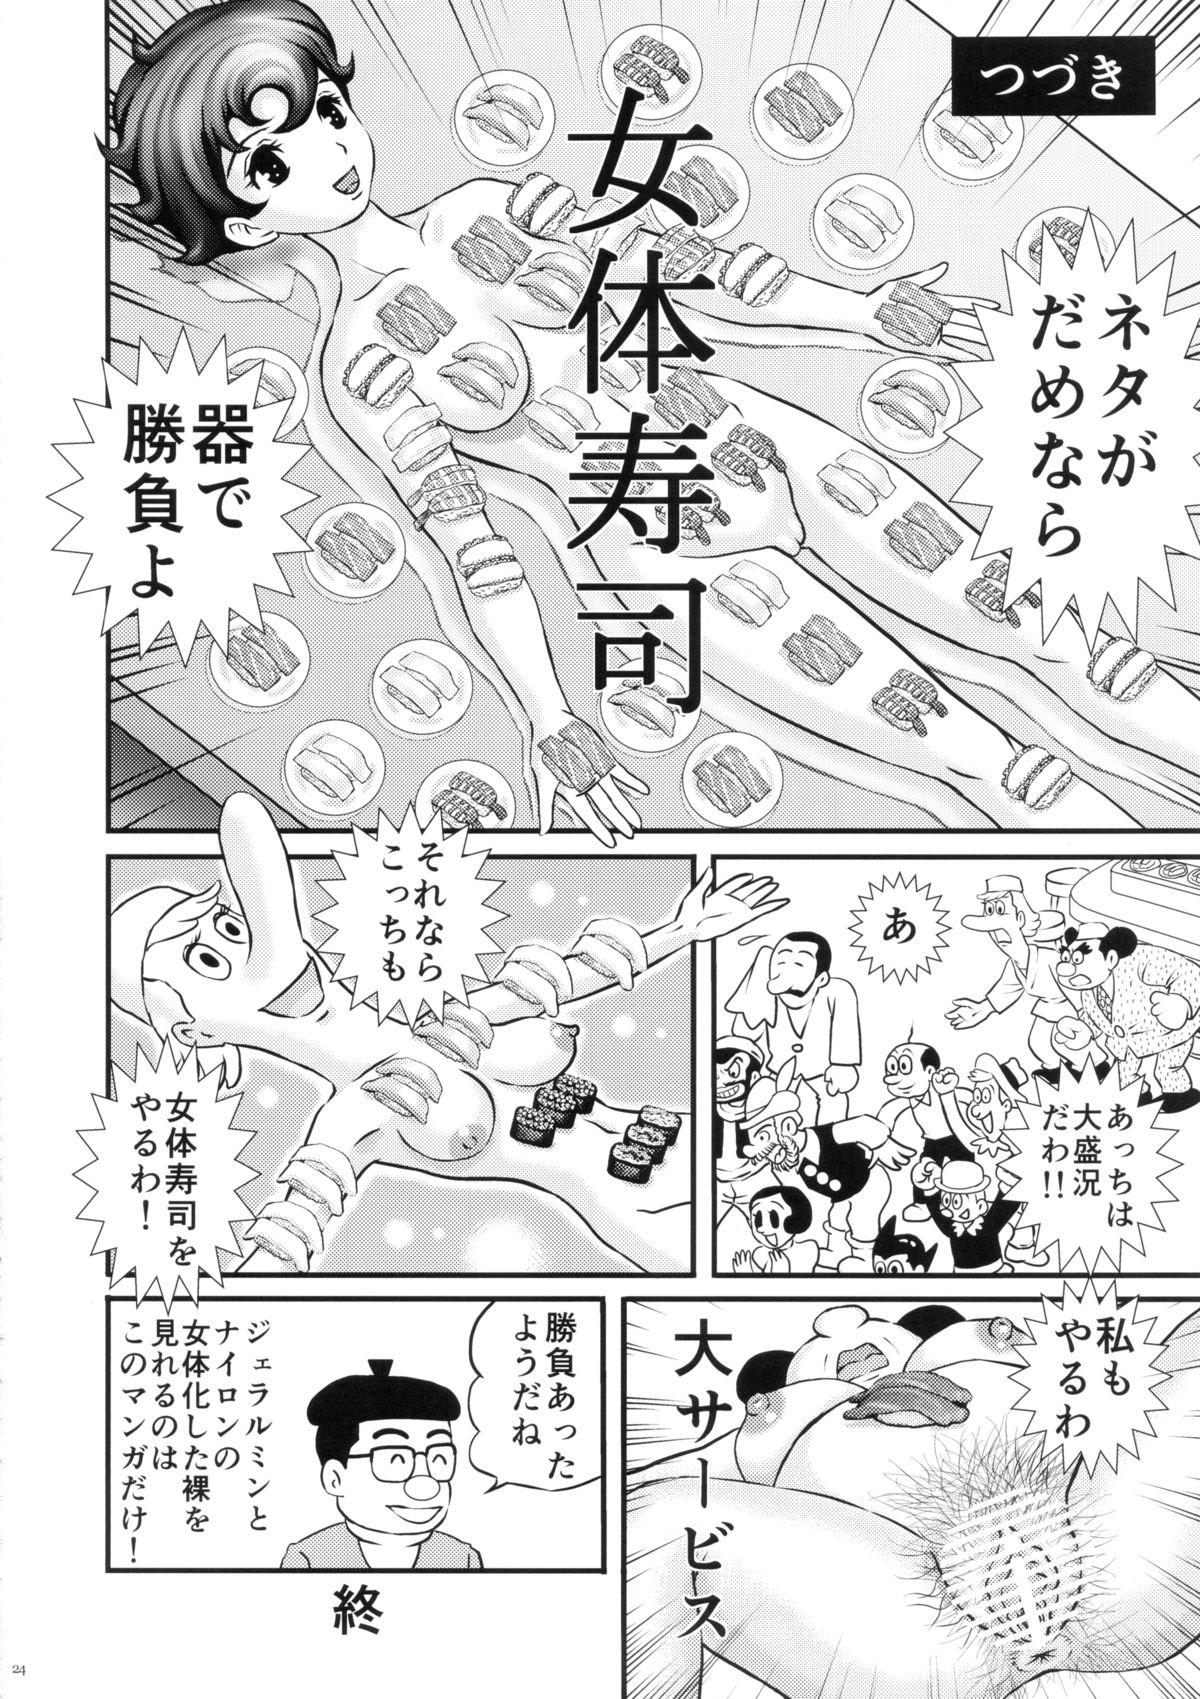 FLOUR2 Tezuka Manga Graffiti 23